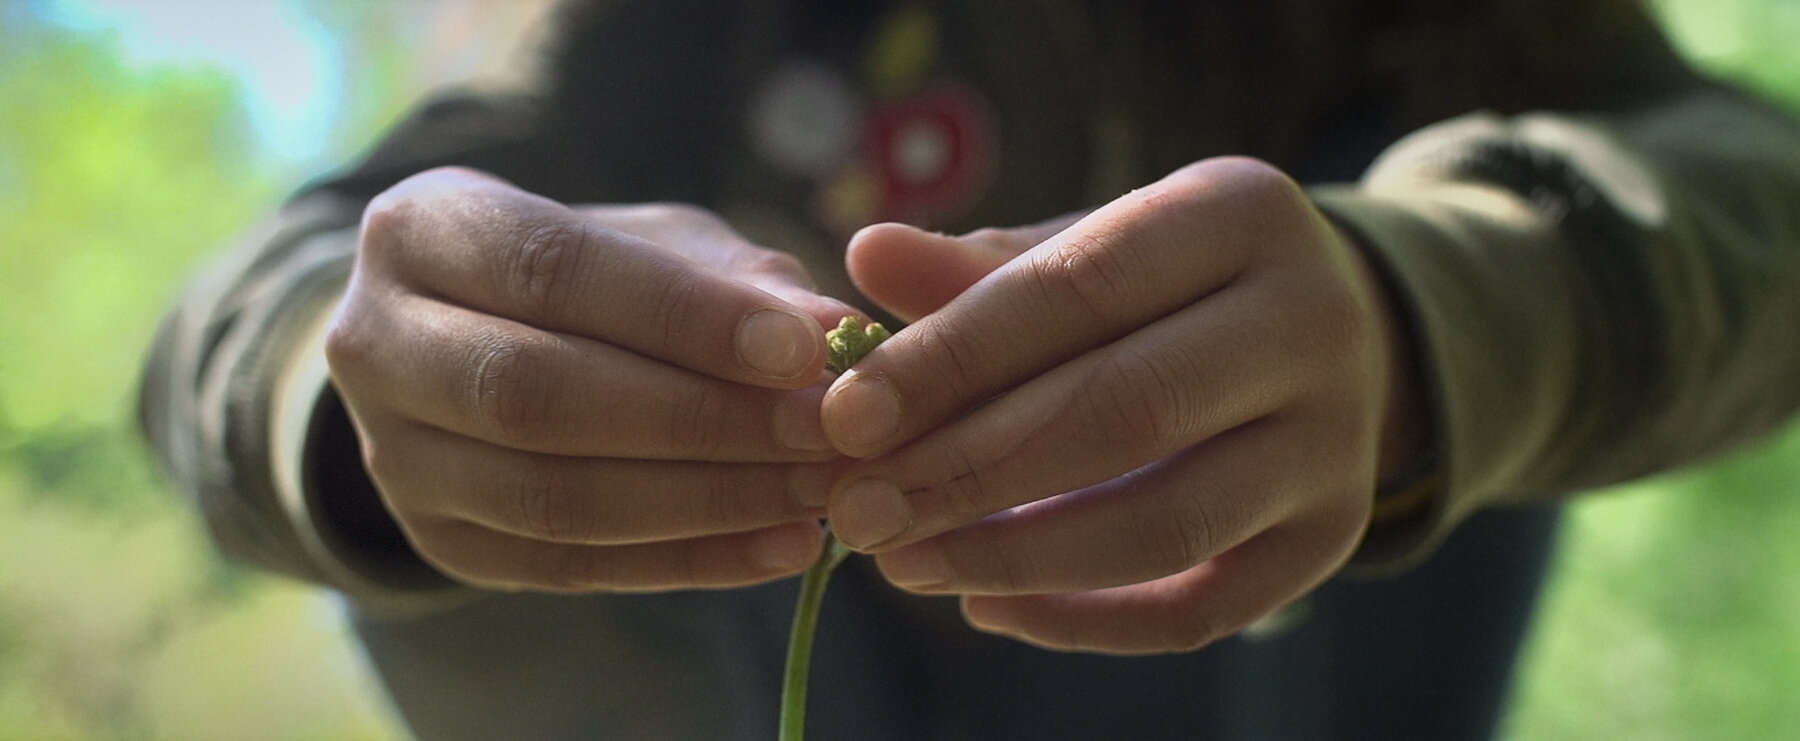 Terra Nova hands on sprout.jpg